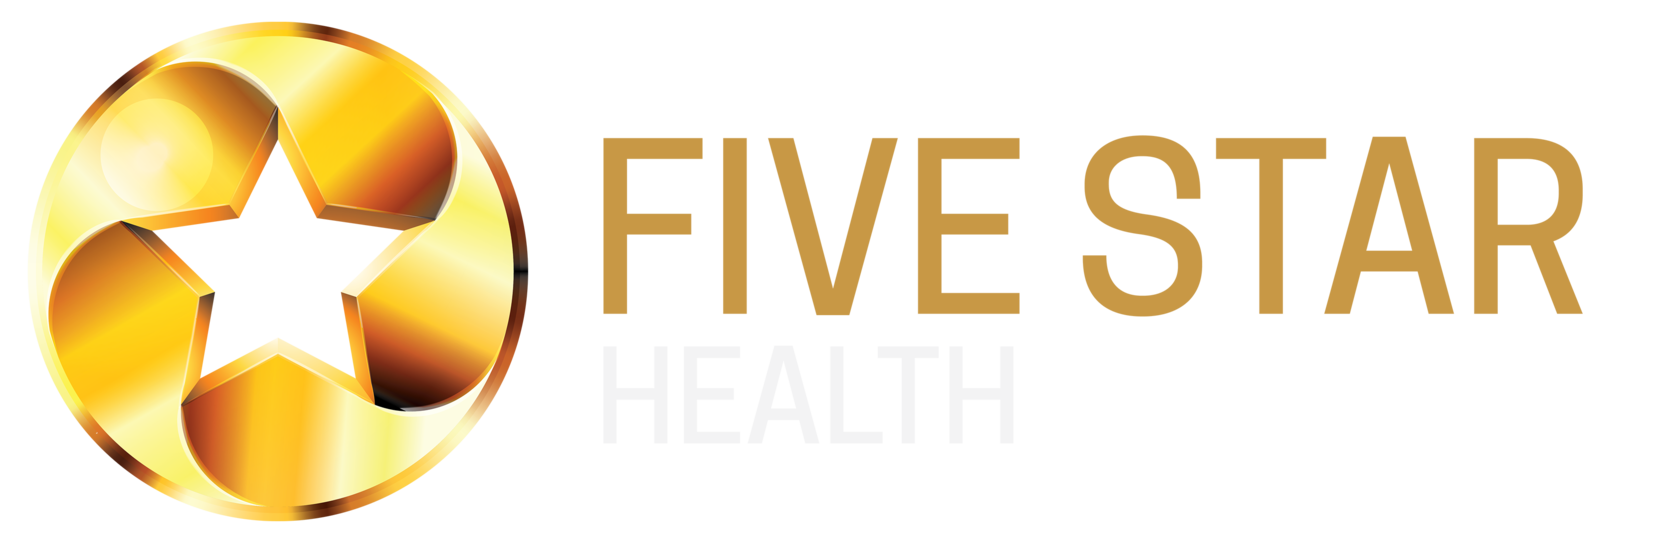 5 Star Health